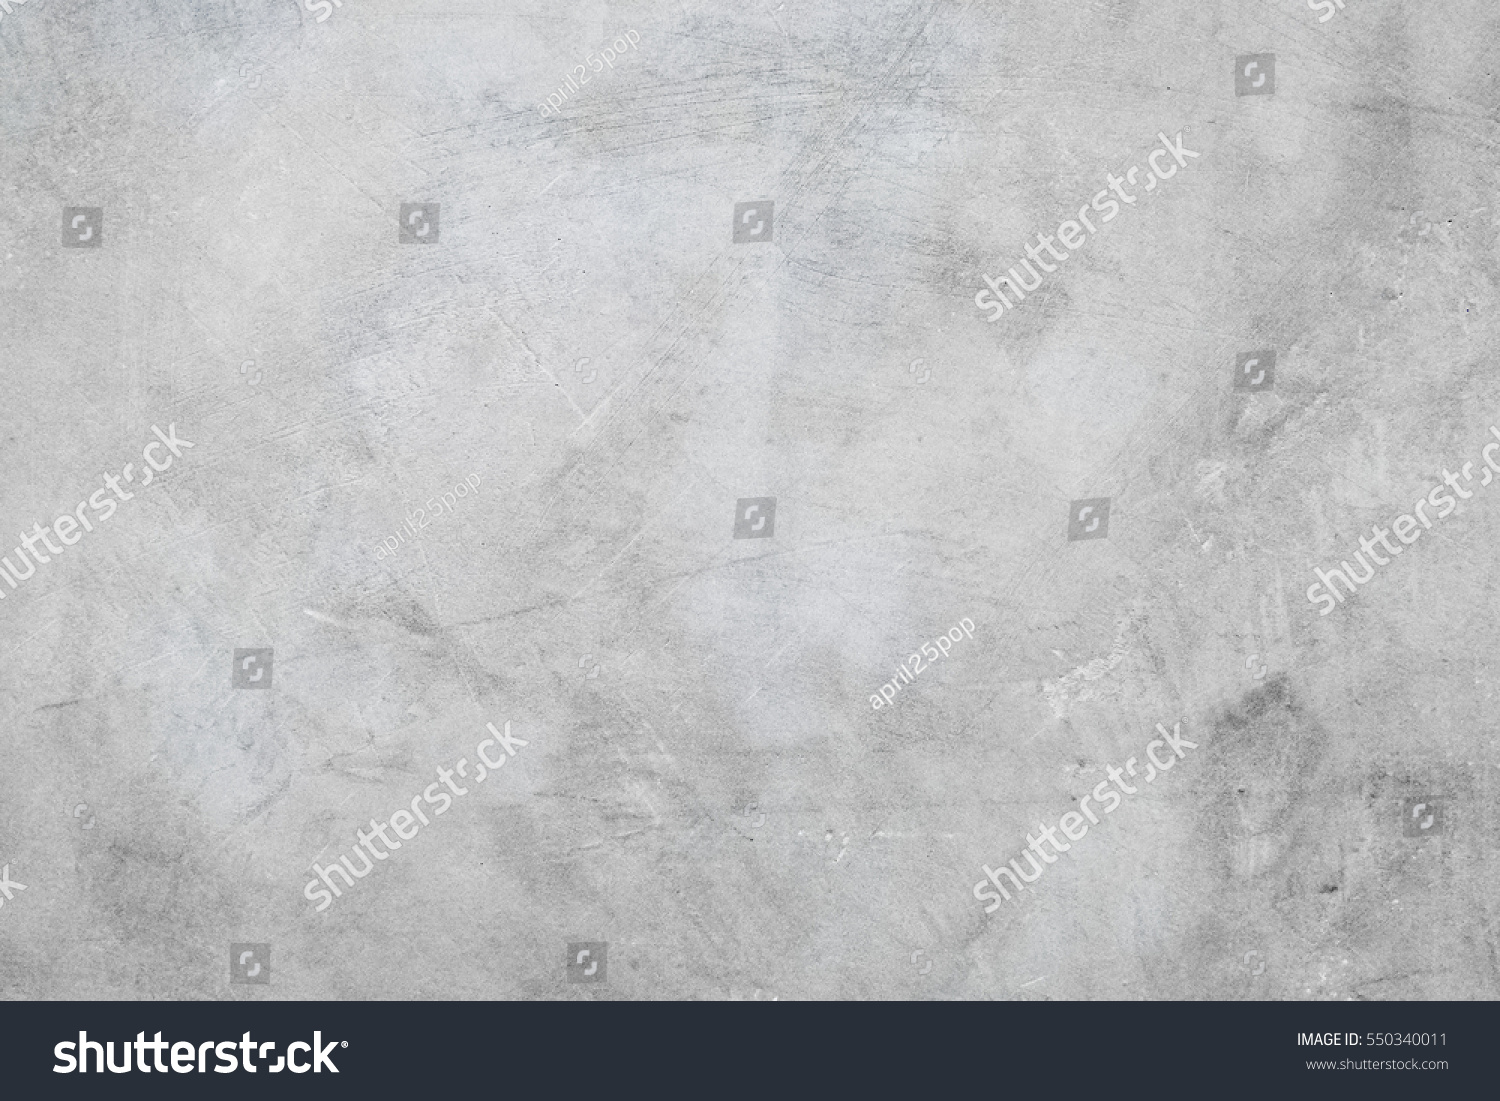 Grey concrete wall texture. #550340011